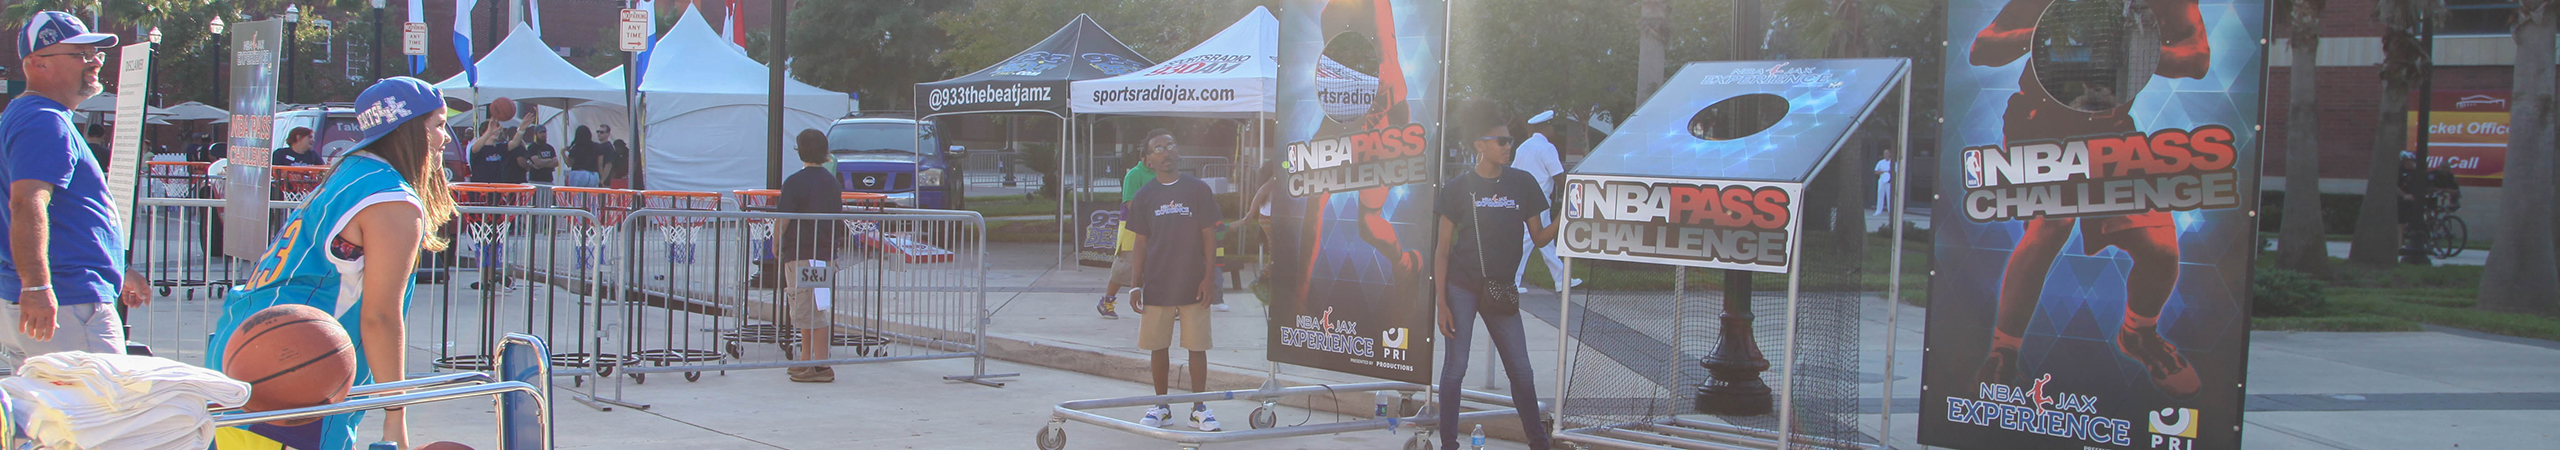 NBA JAX Experience 2014